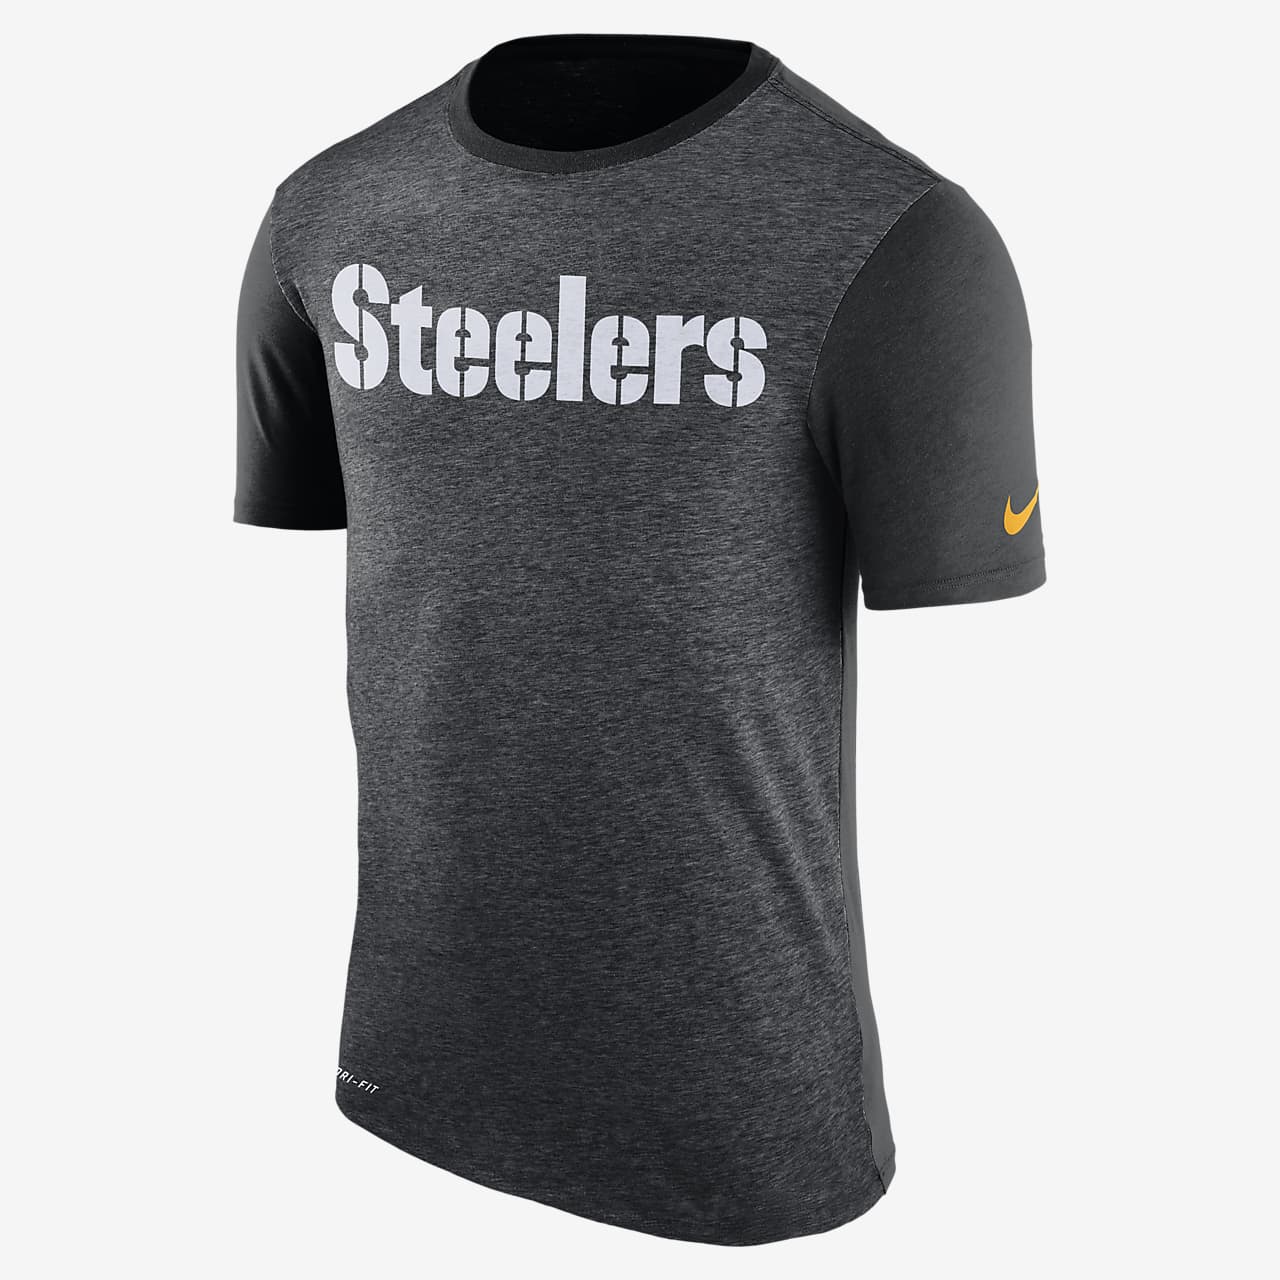 Nike Dry Color Dip (NFL Steelers) Men's T-Shirt. Nike BG